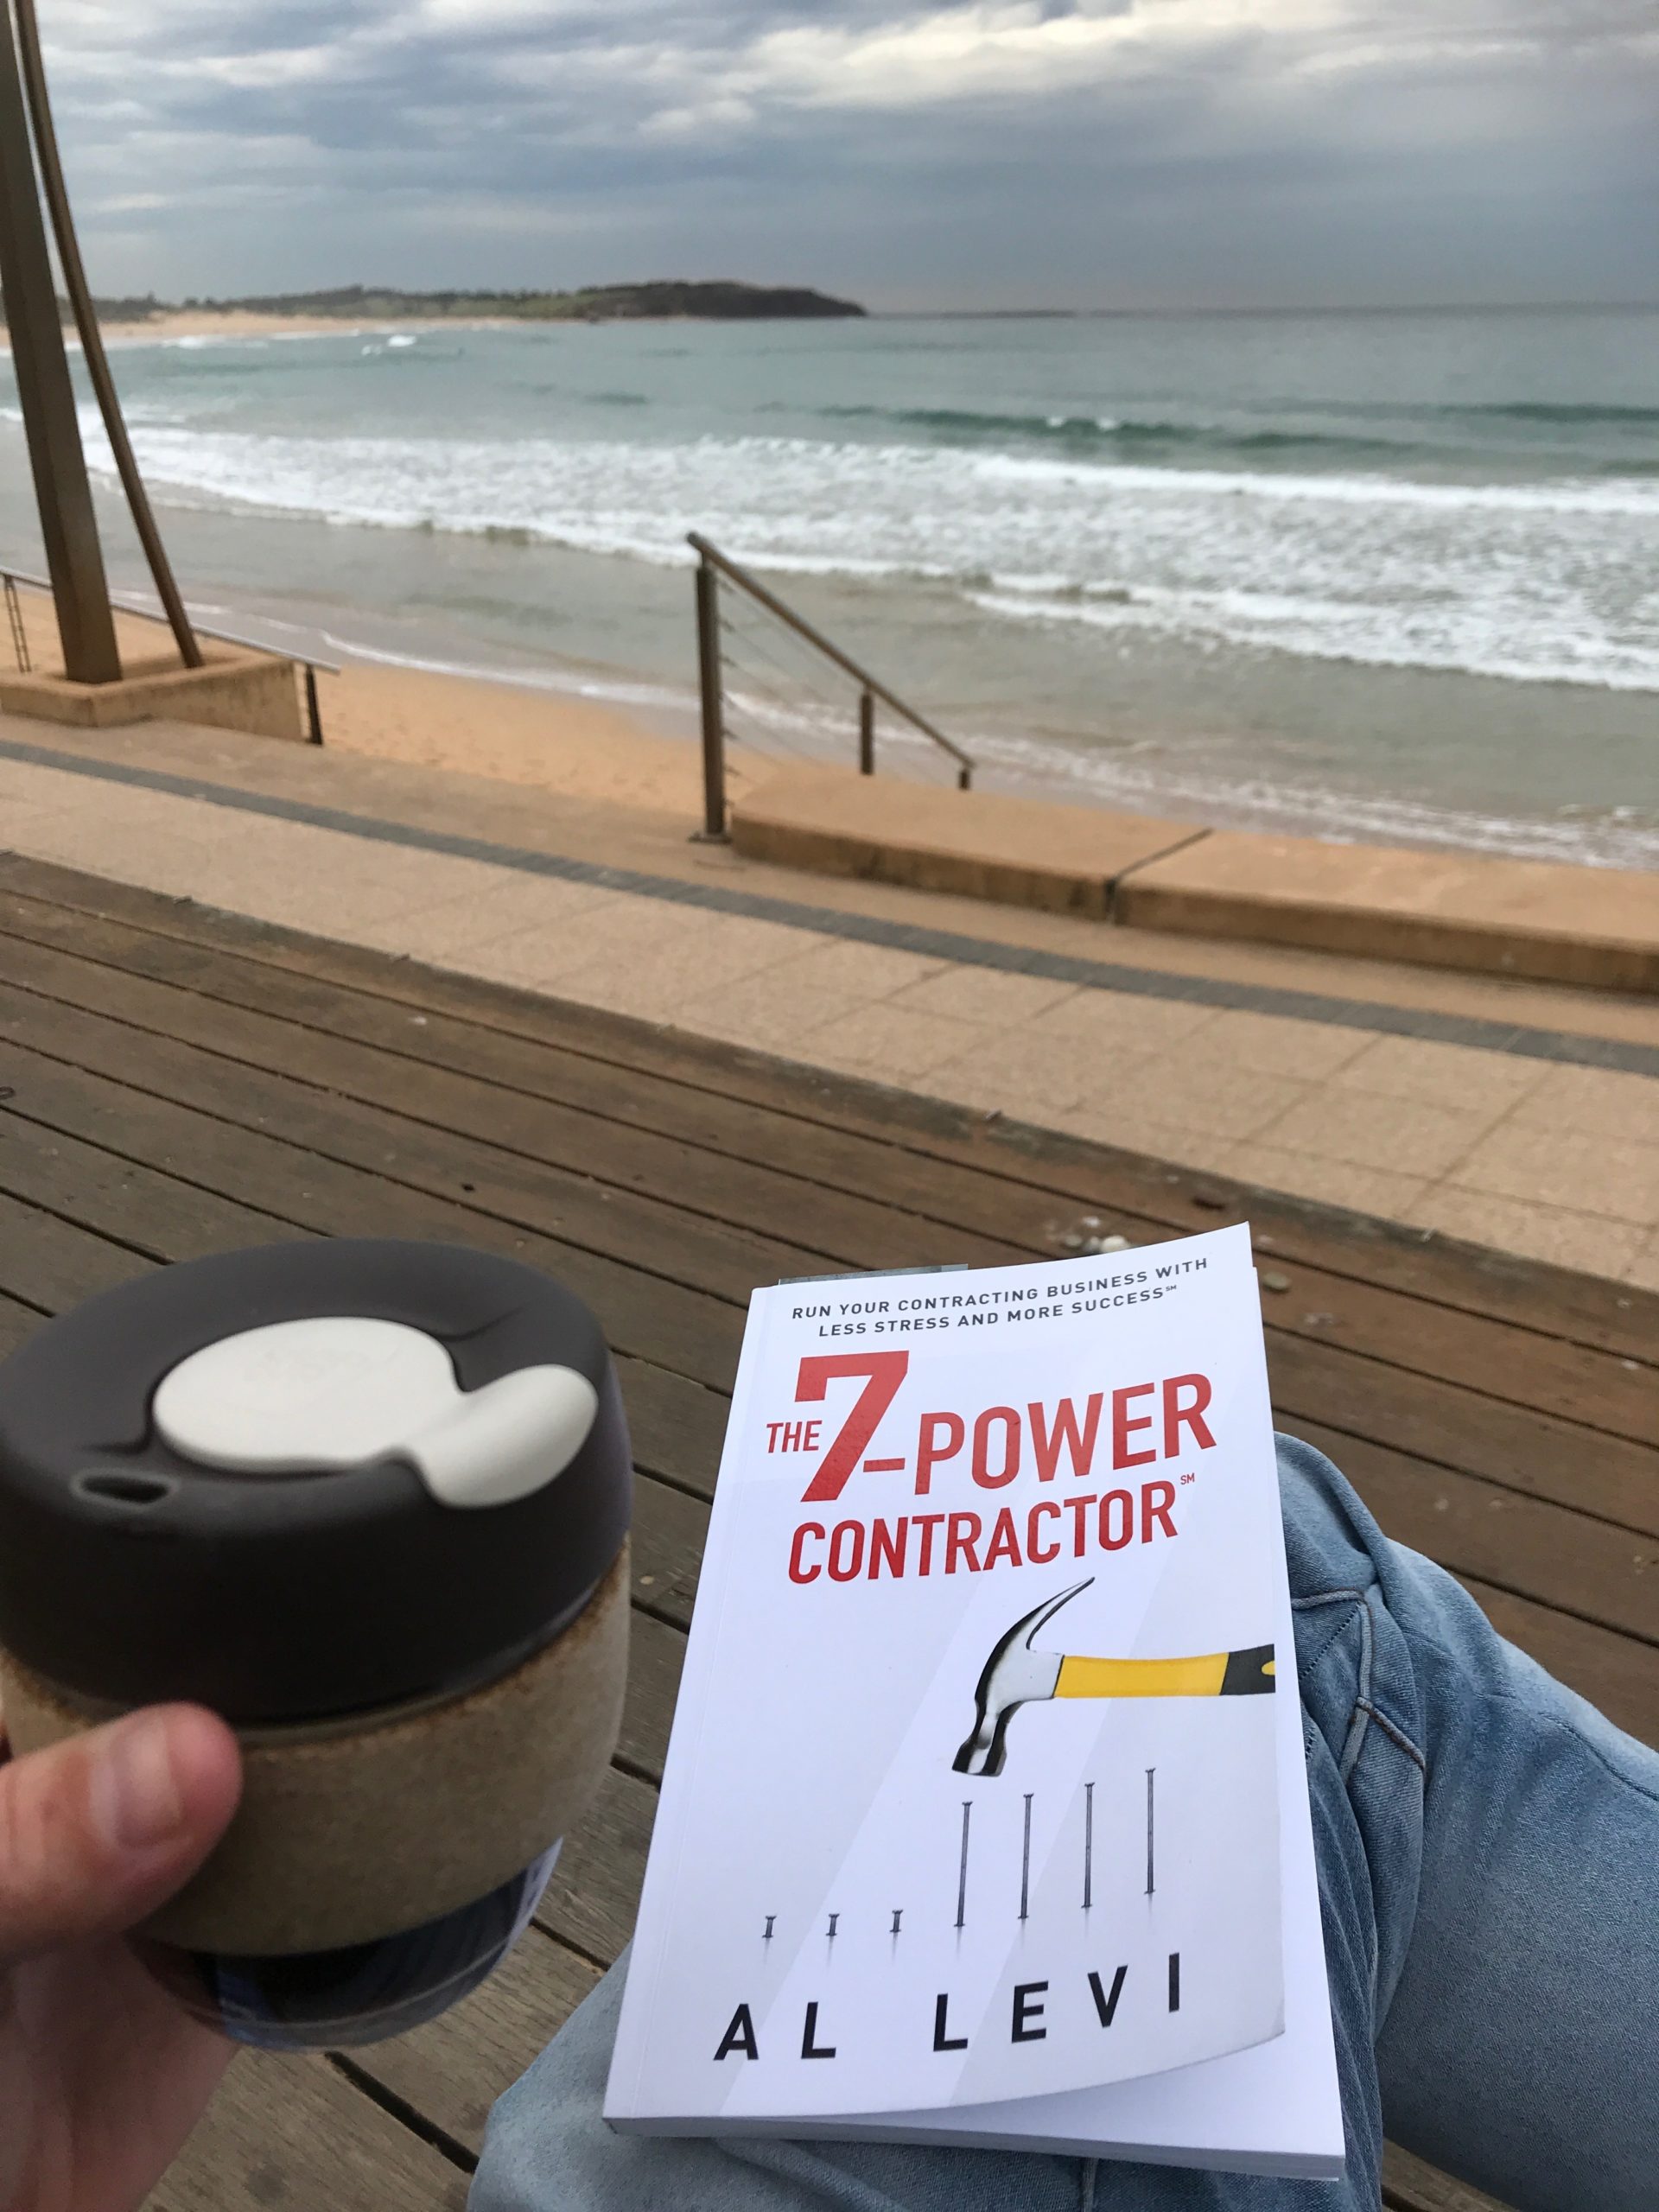 The 7-Power Contractor Testimonial by Matt Jones